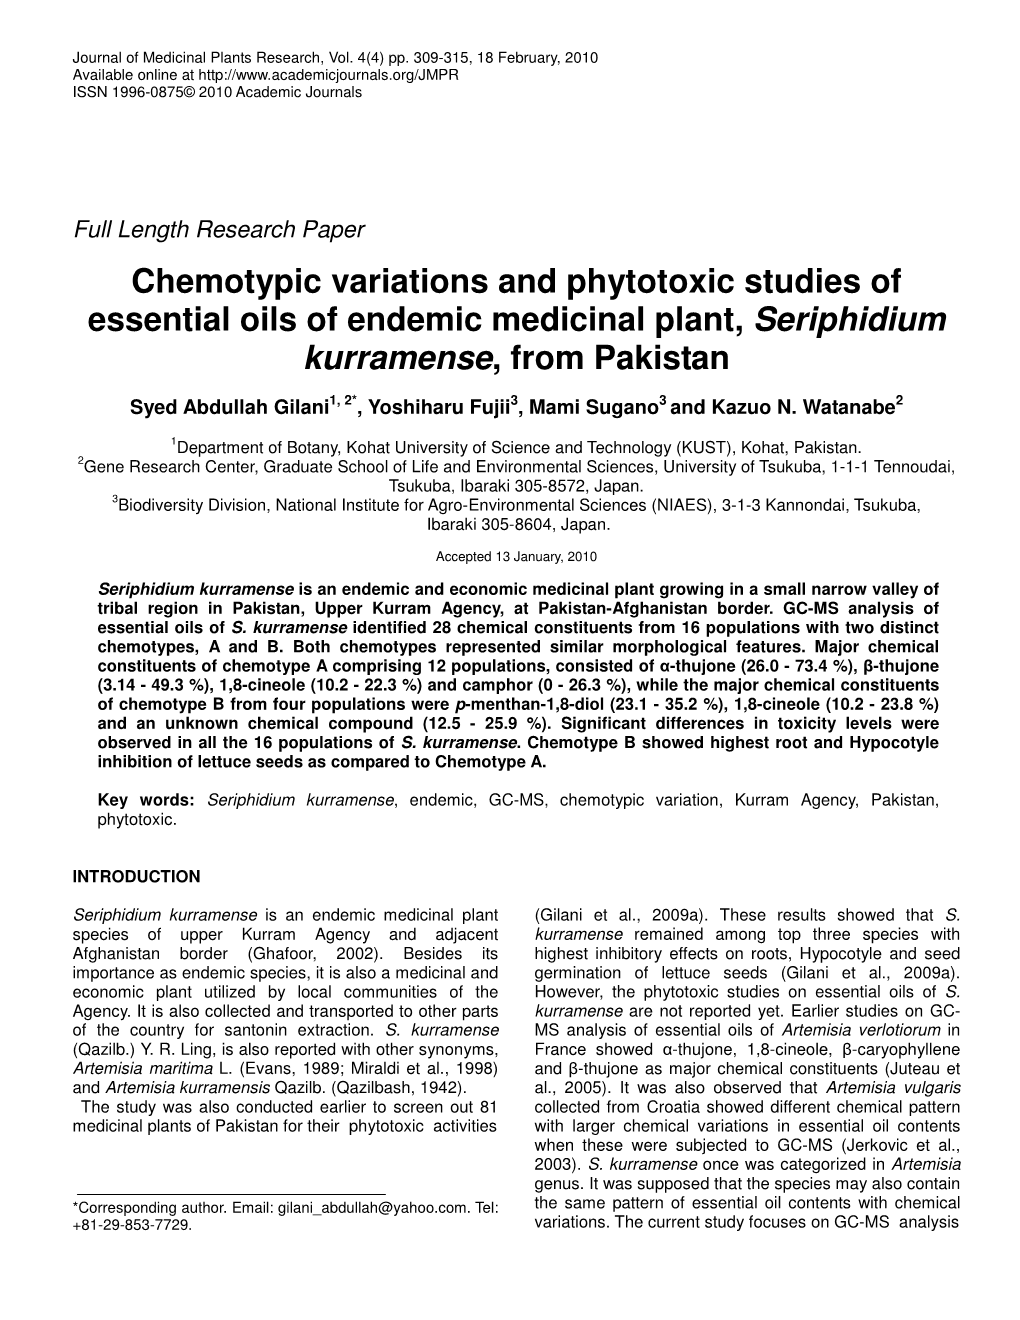 Chemotypic Variations and Phytotoxic Studies of Essential Oils of Endemic Medicinal Plant, Seriphidium Kurramense, from Pakistan